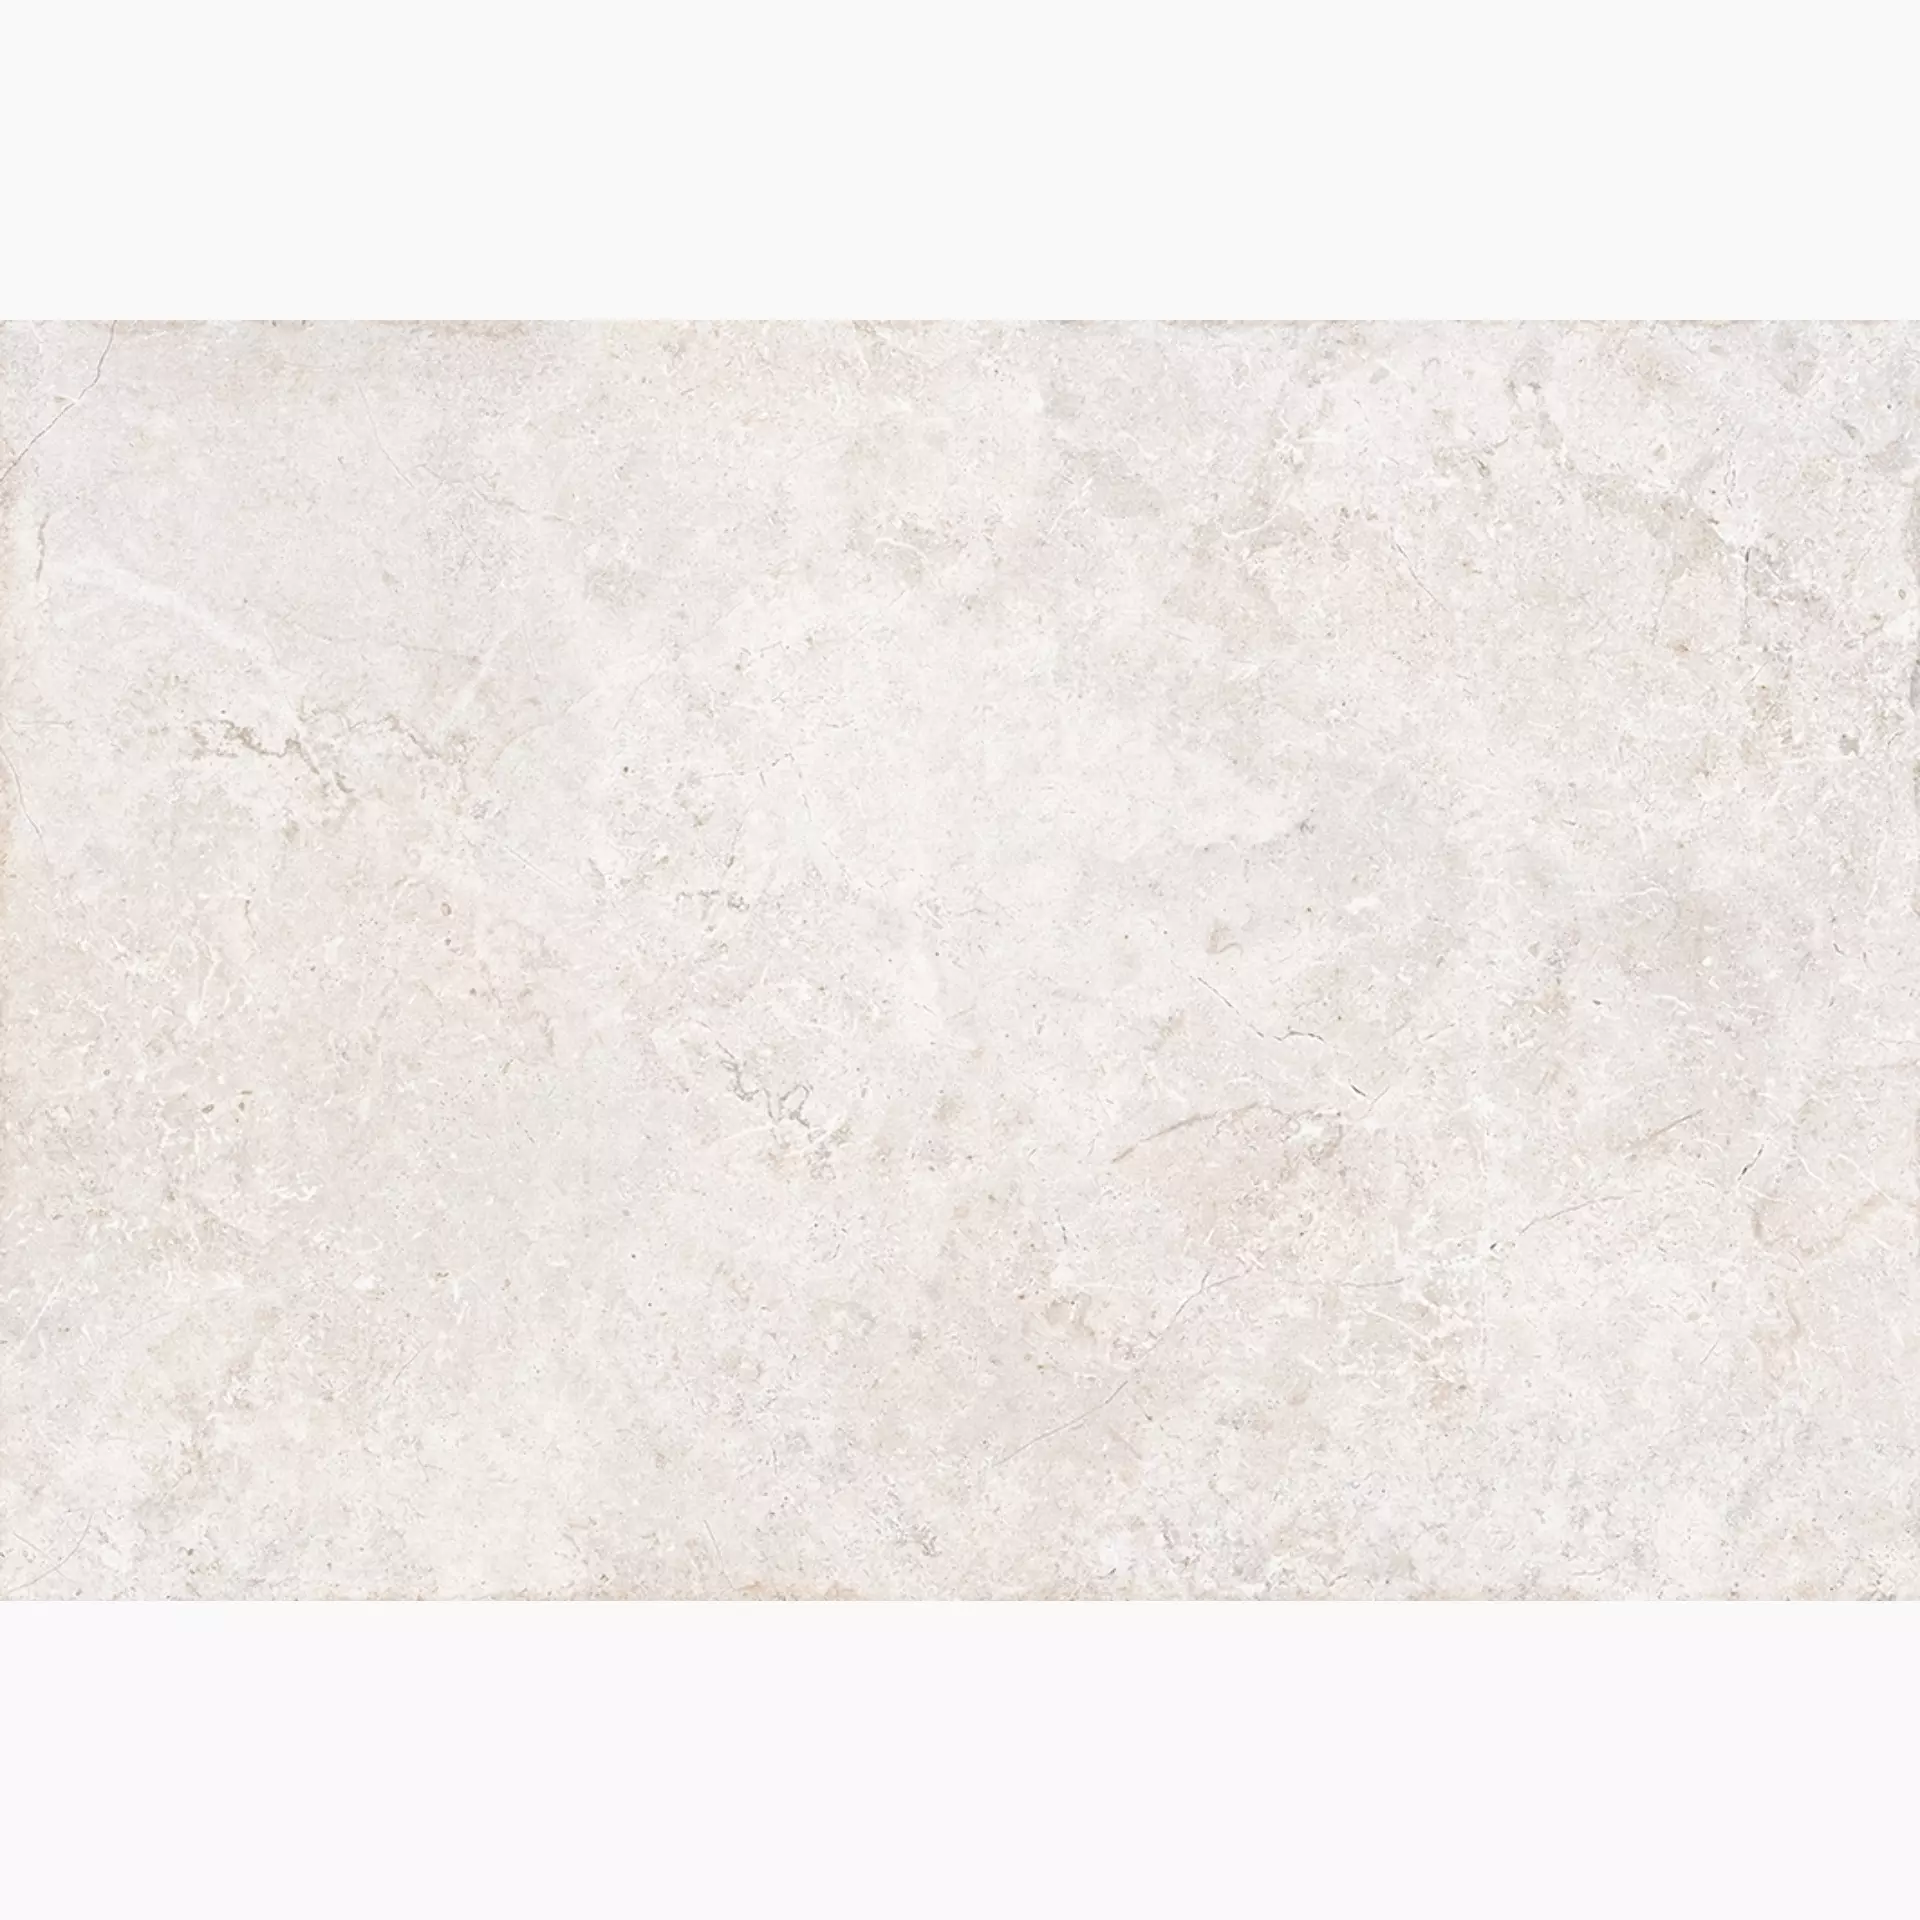 Sichenia Amboise Bianco Grip Chipped Edge 0192881 60x90cm rectified 20mm